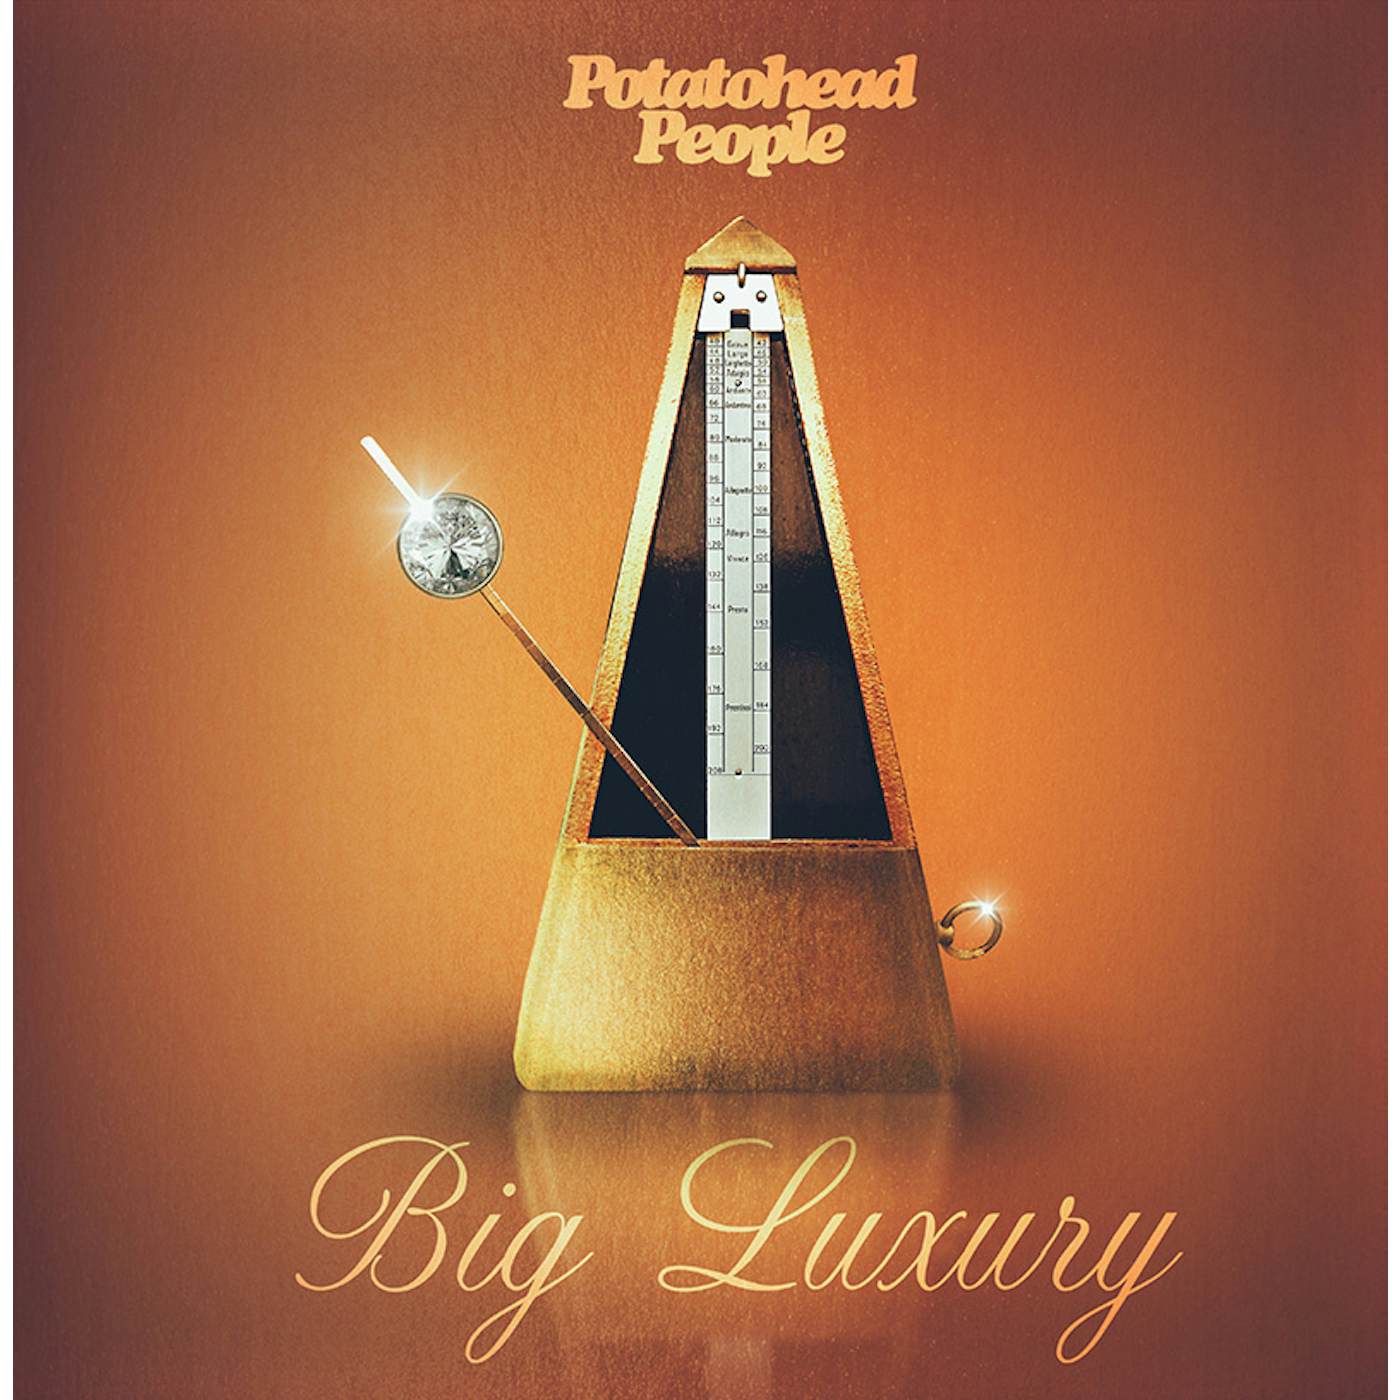 Potatohead People BIG LUXURY Vinyl Record - UK Release